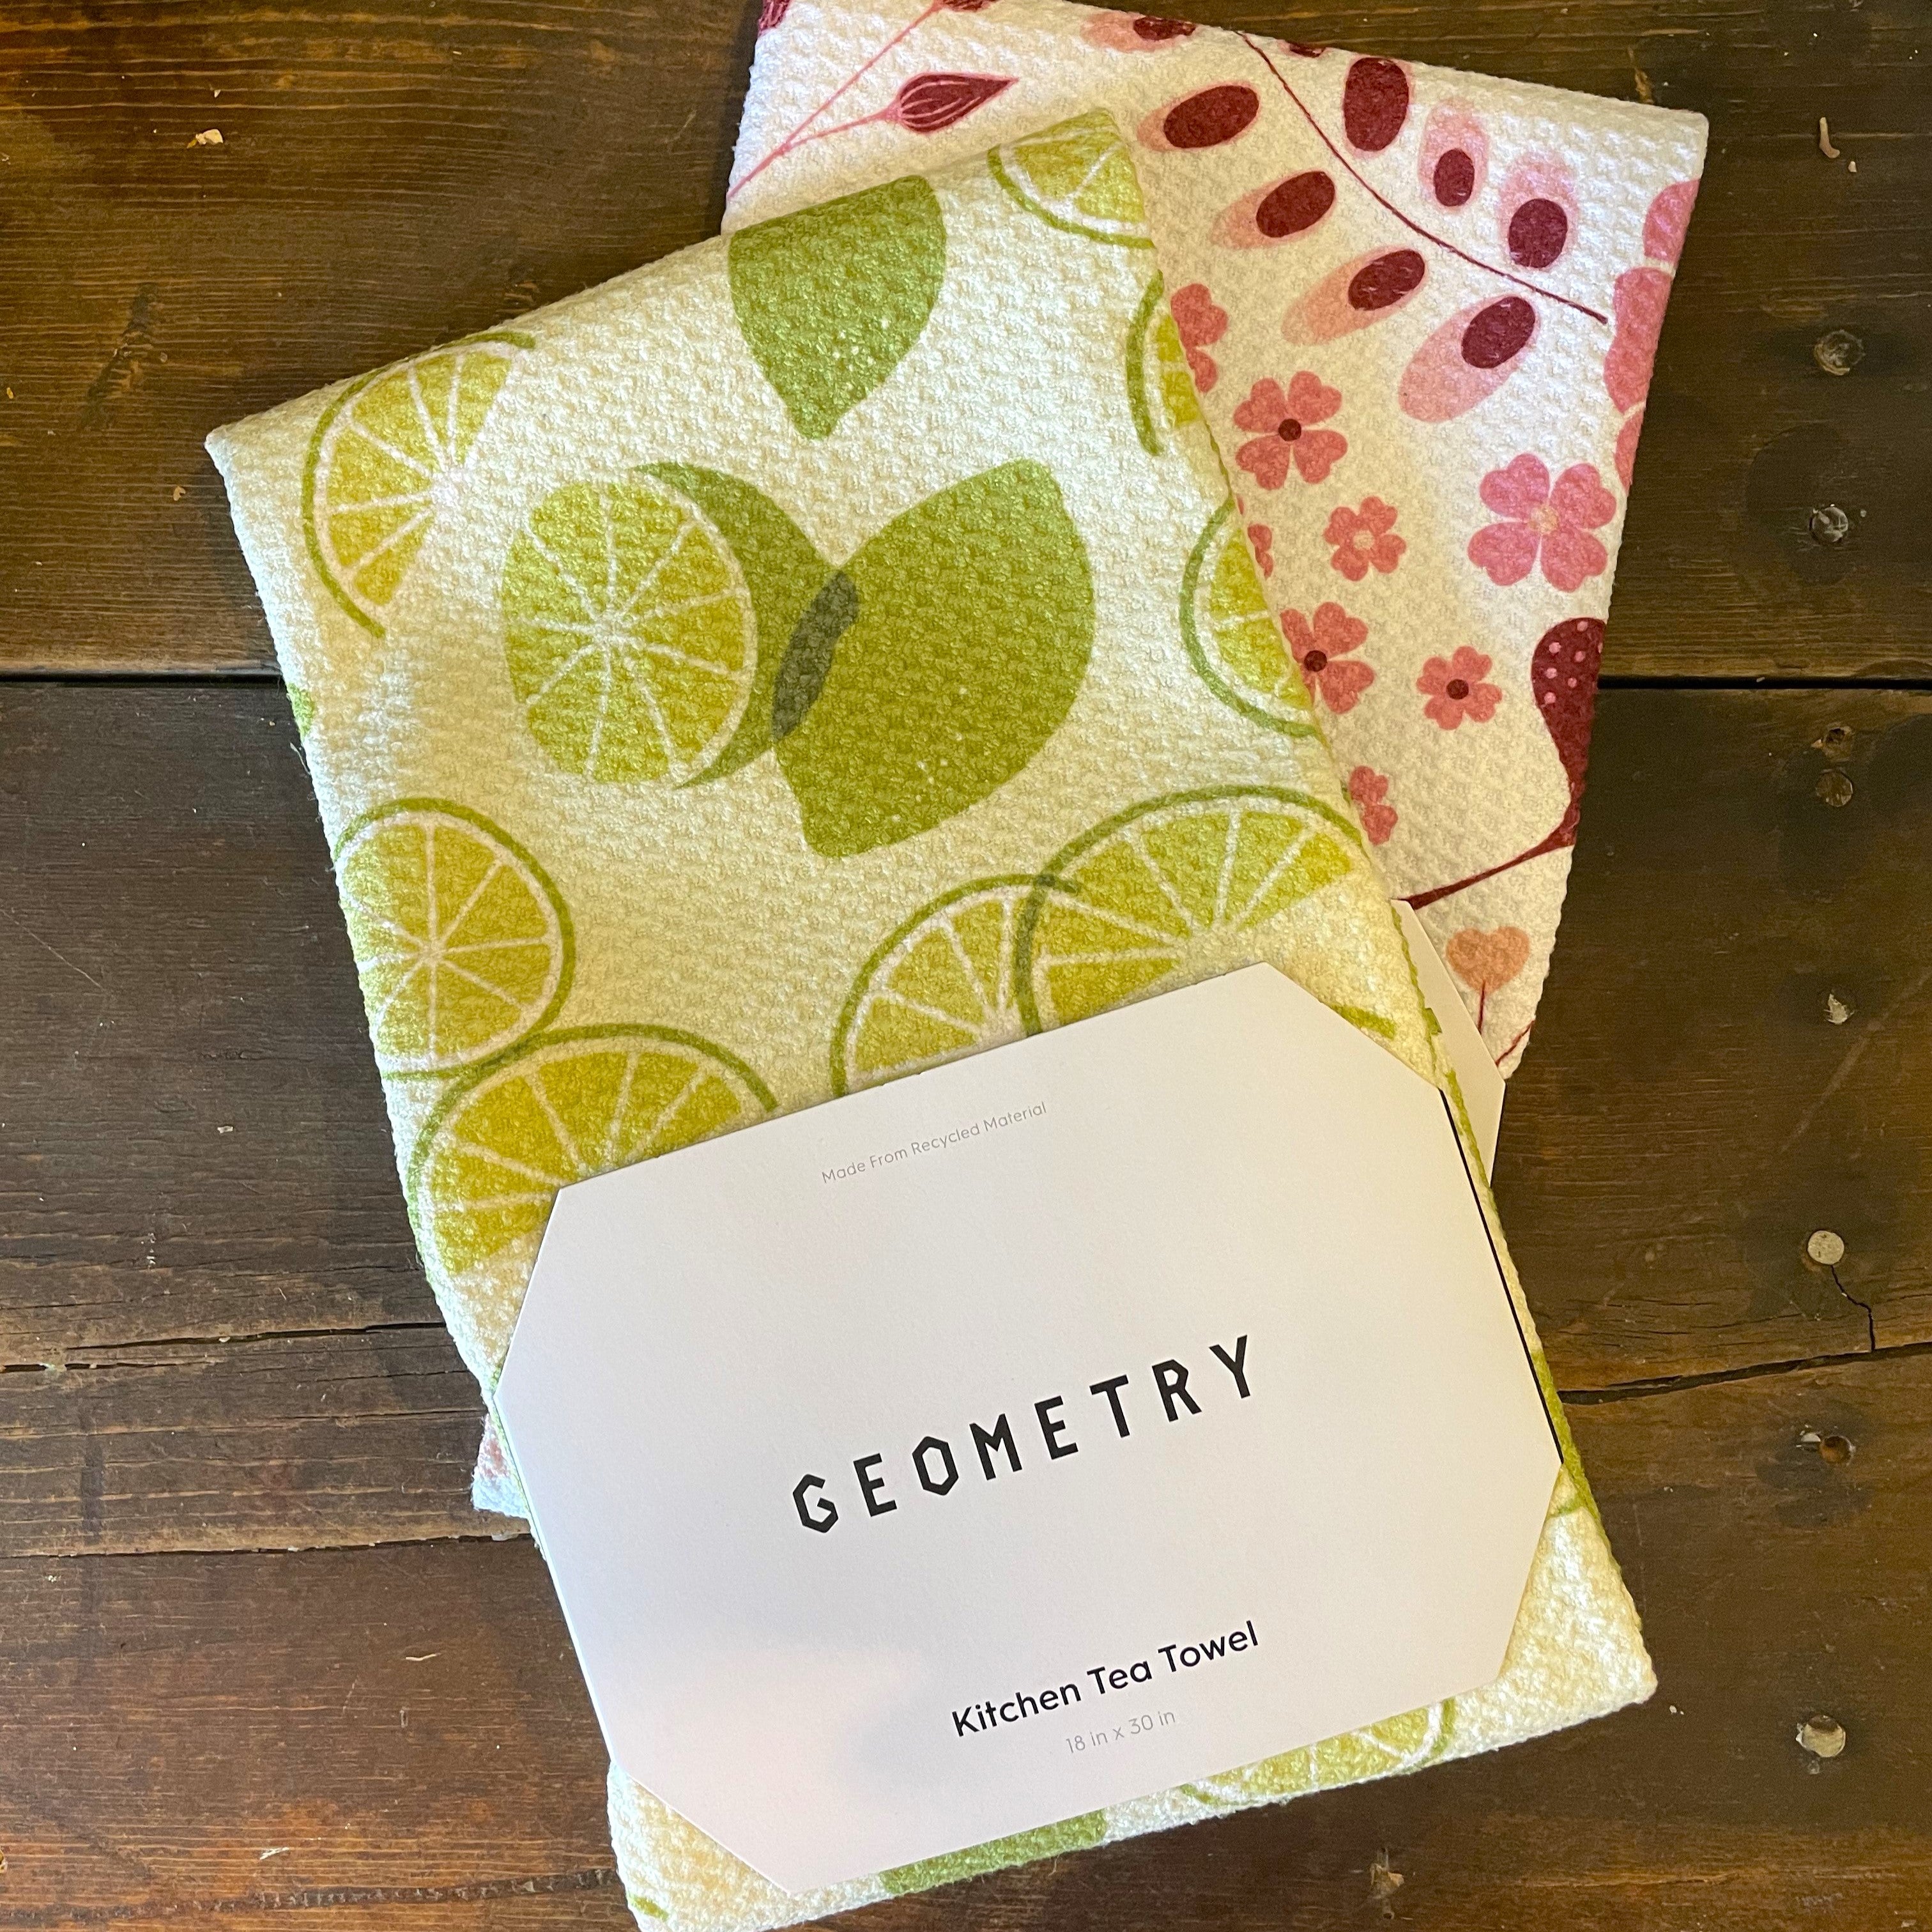 Geometry Geometry Kitchen Towel